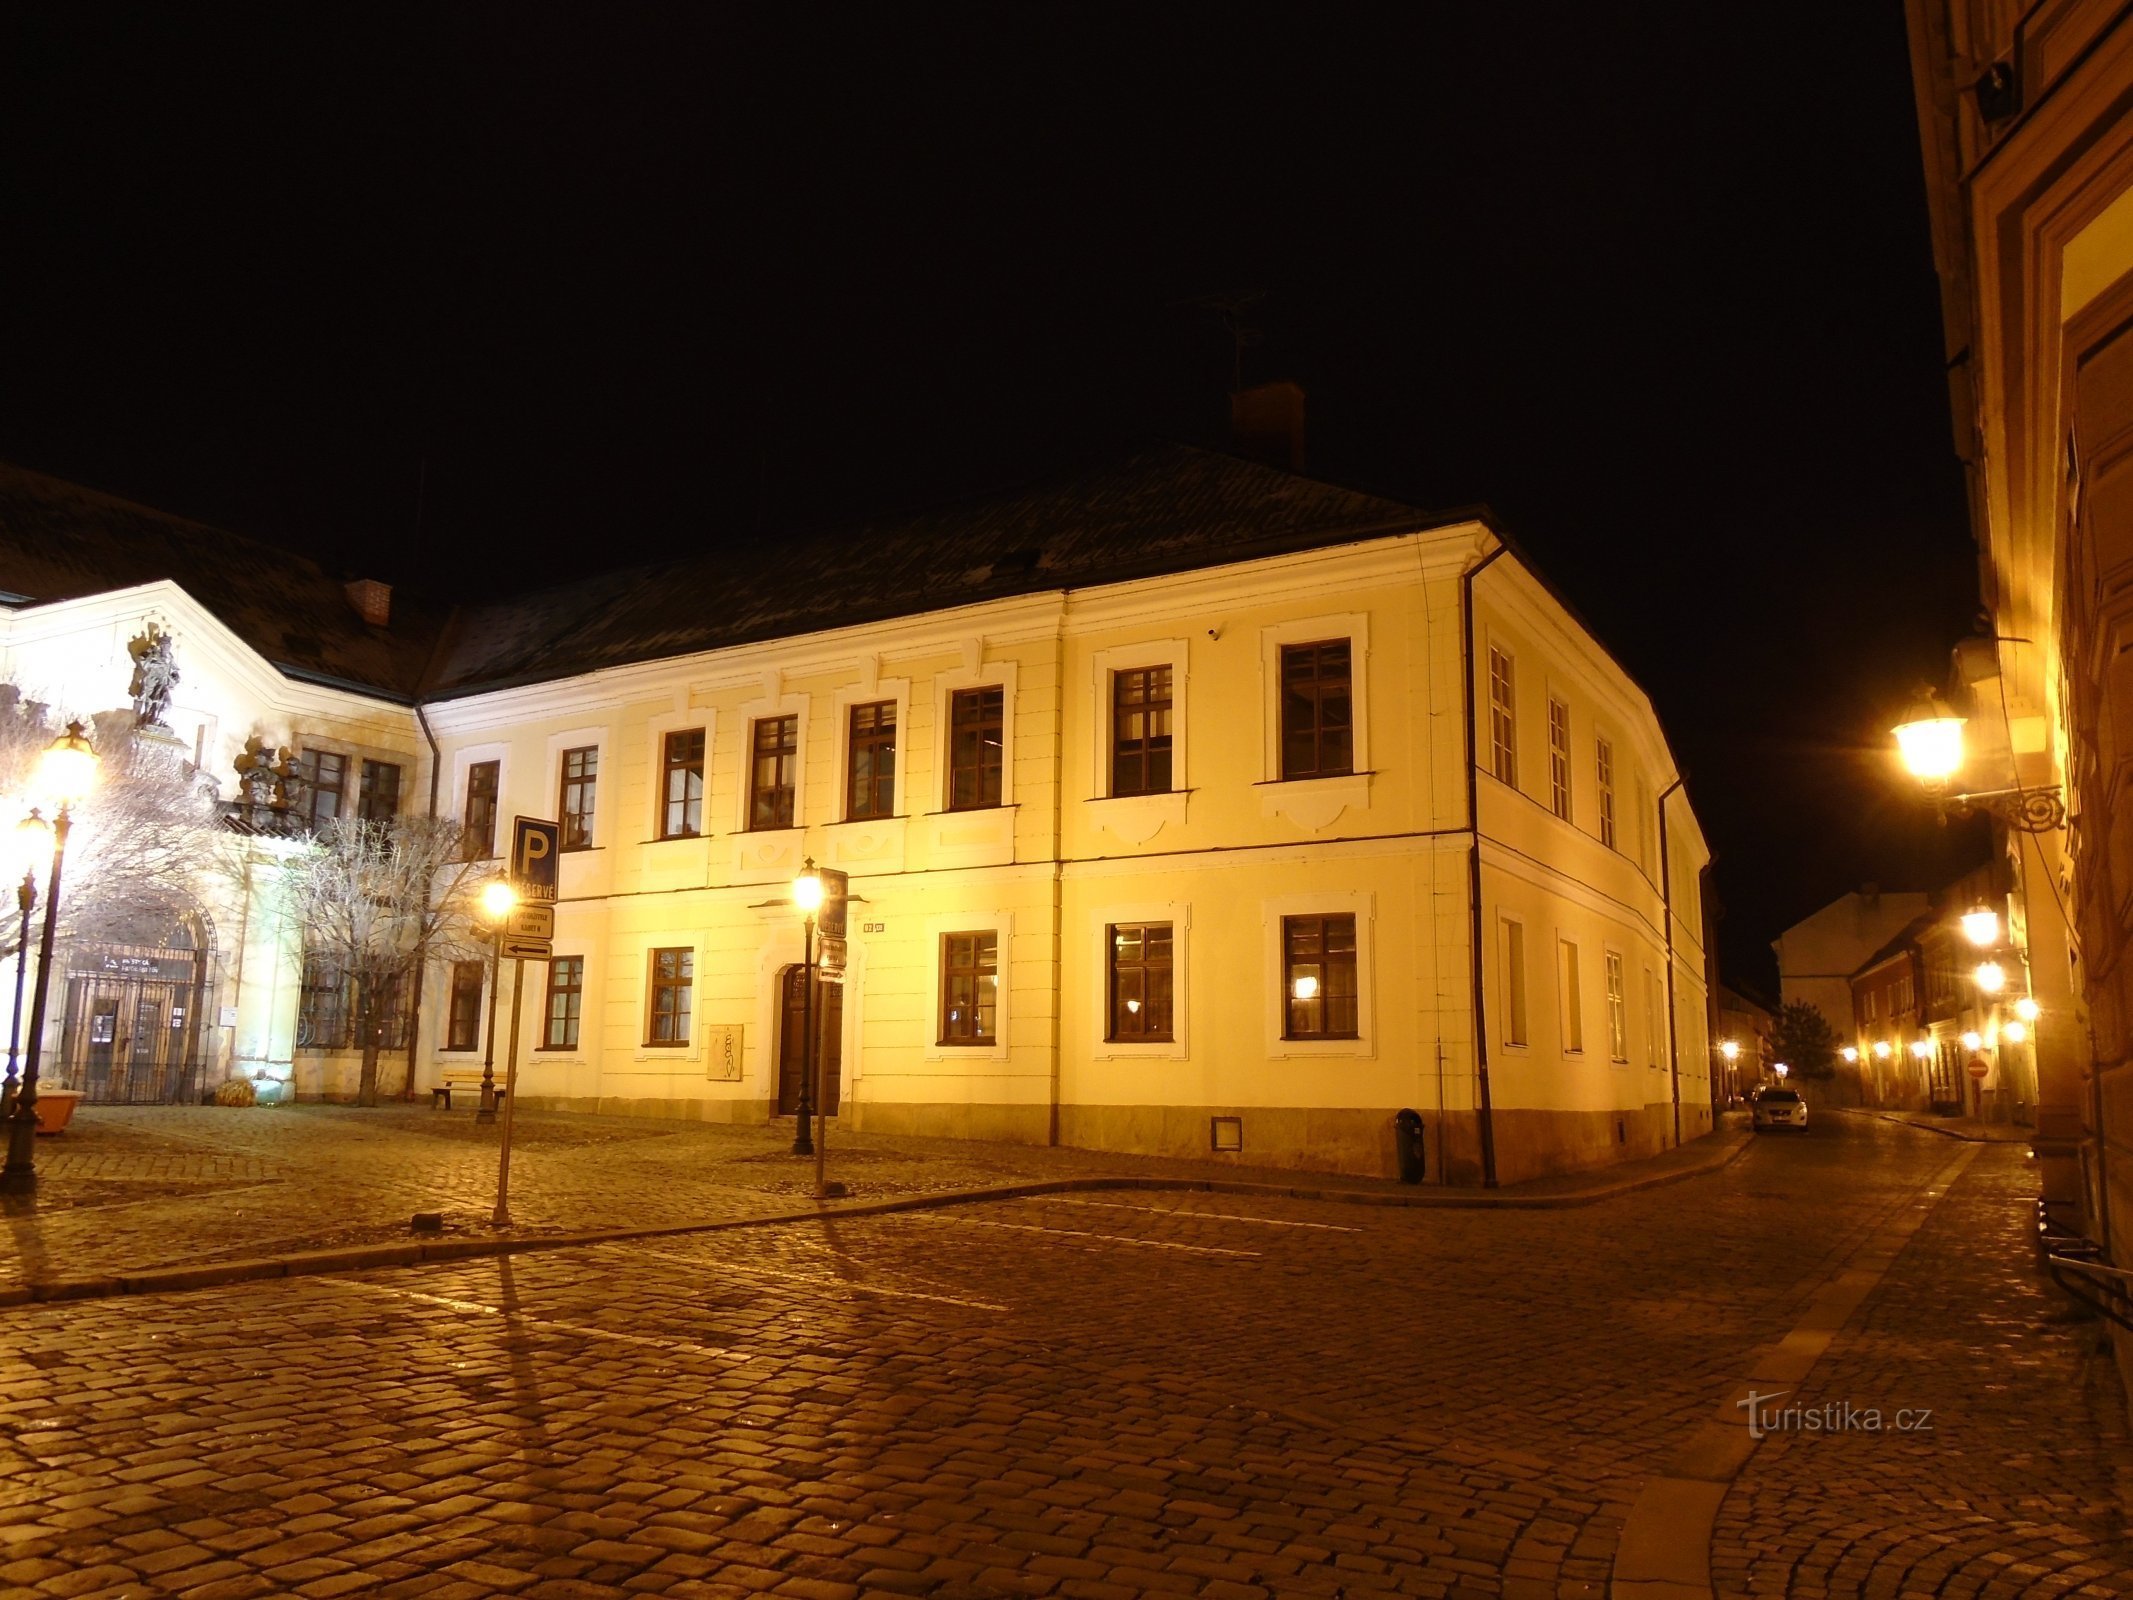 Linnassa nro 91 (Hradec Králové, 10.12.2017. lokakuuta XNUMX)